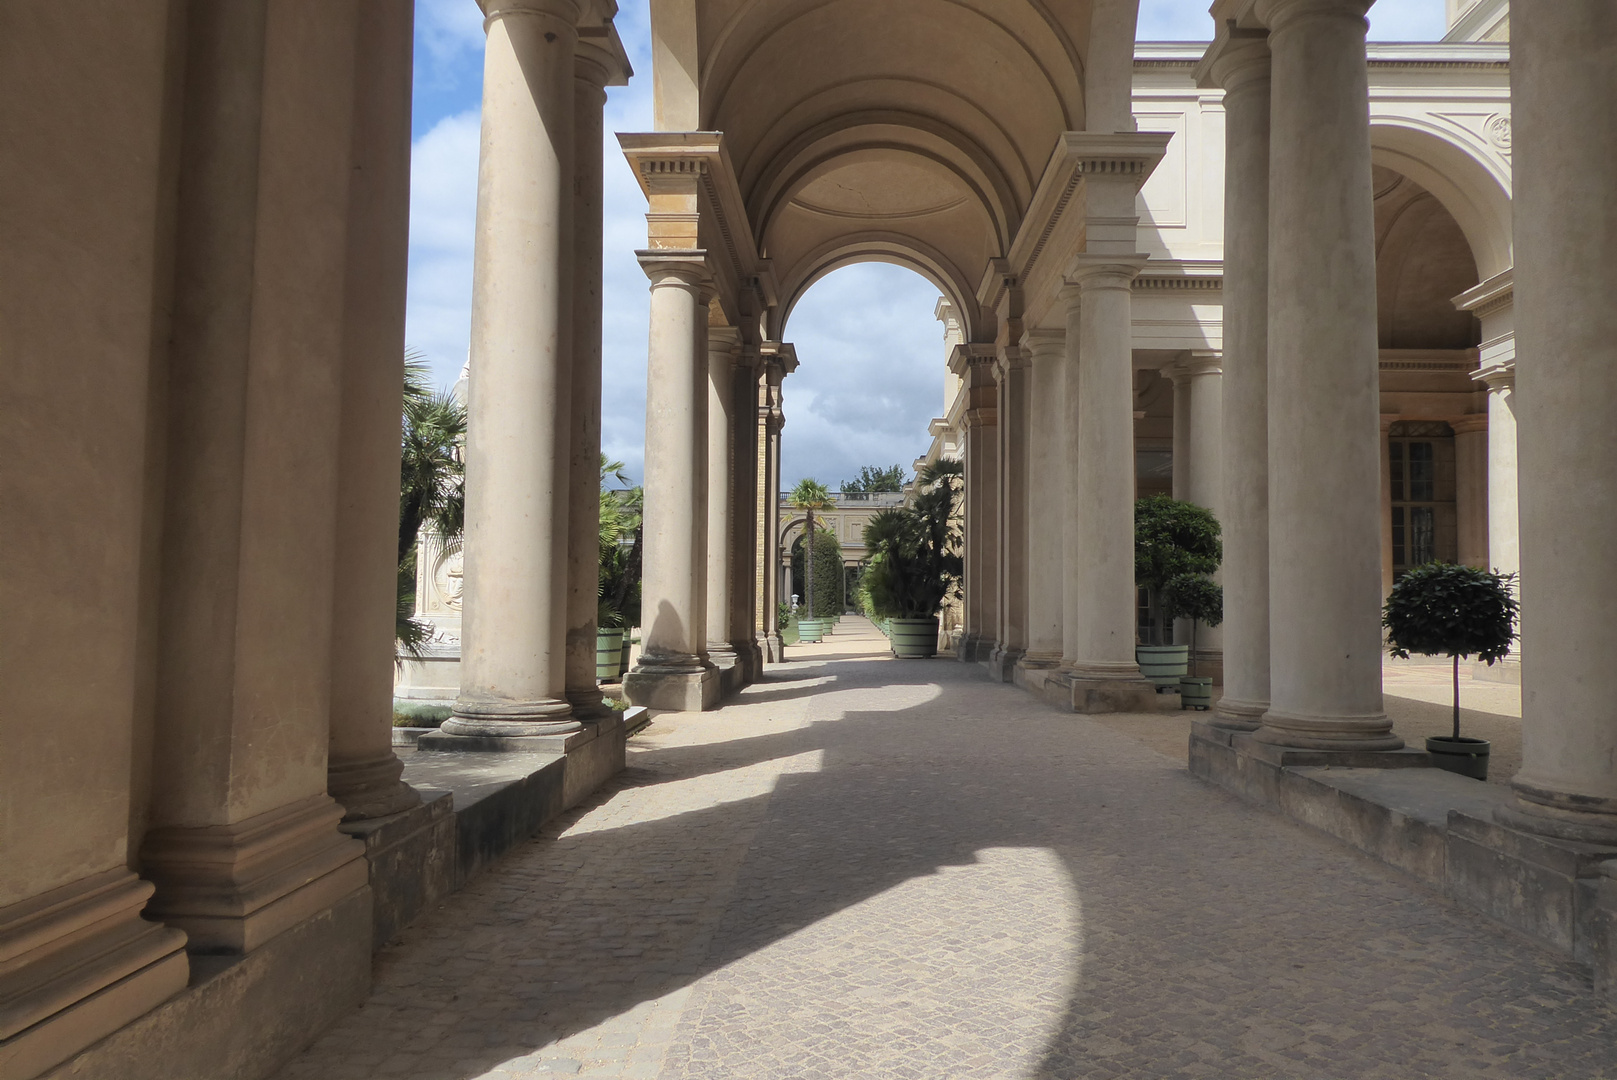 Durchblick an der Orangerie im Park Sanssouci